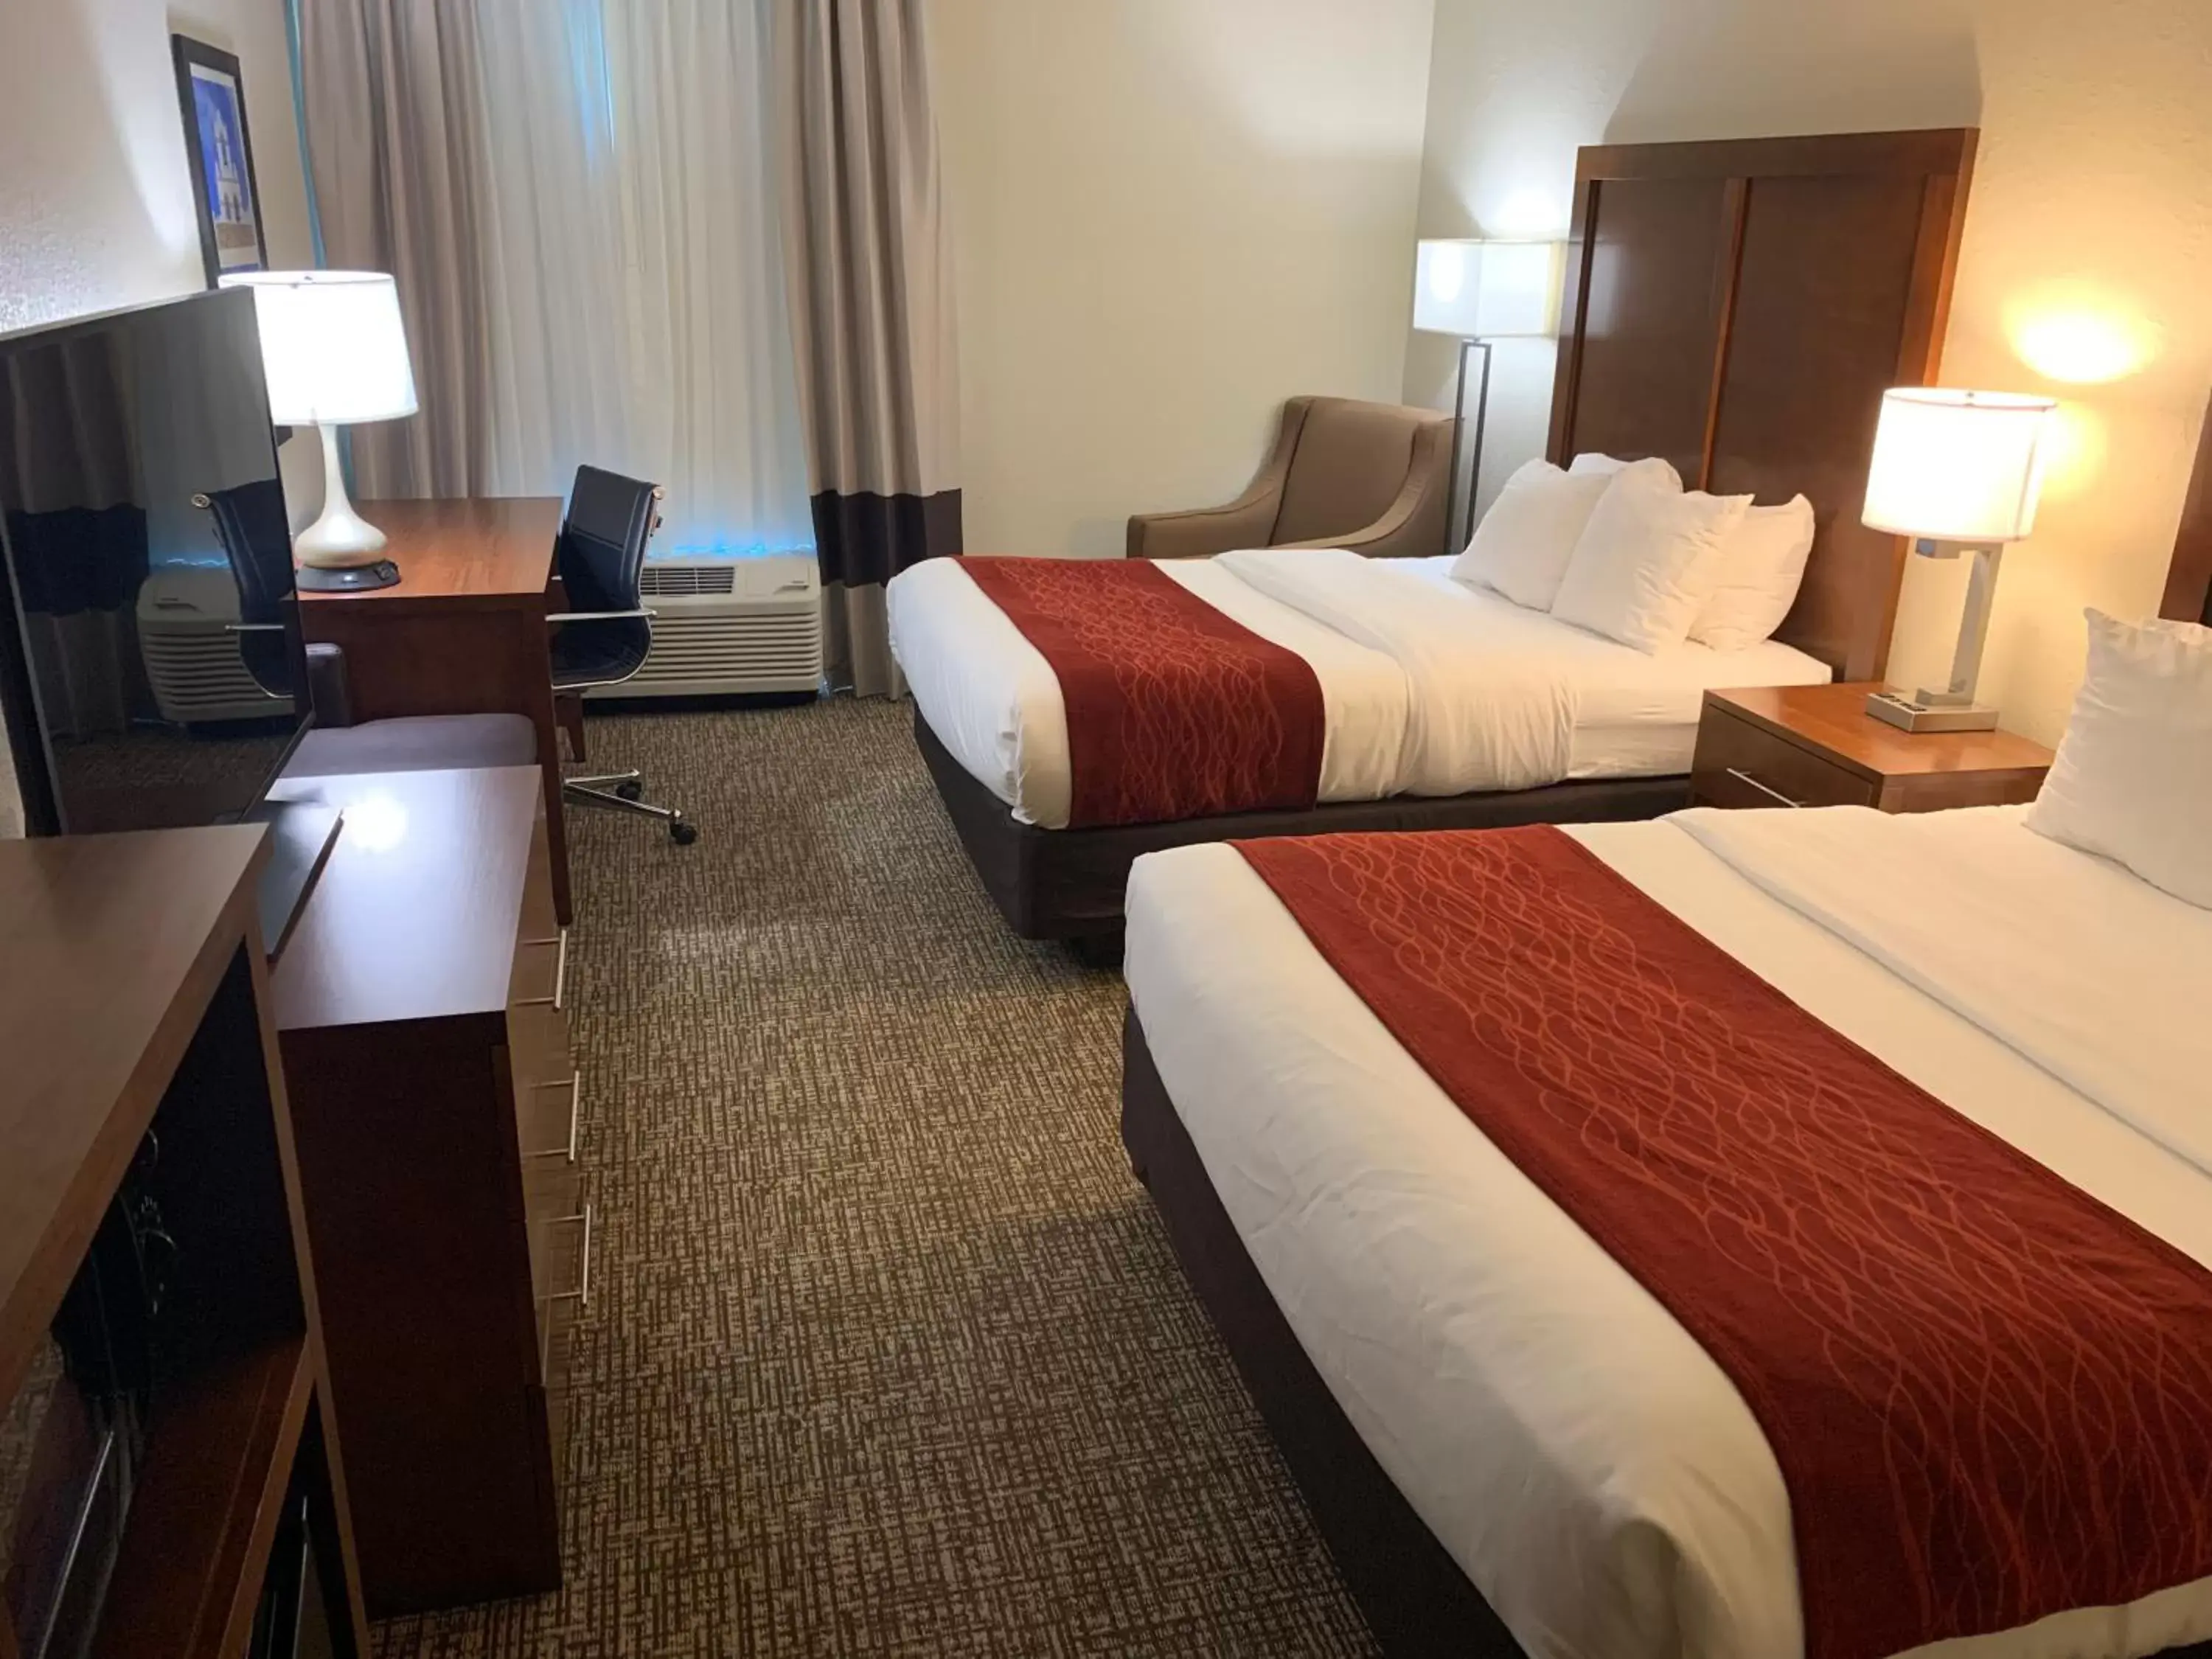 Superior Queen Room with Two Queen Beds - Non-Smoking in Comfort Inn & Suites San Antonio Airport